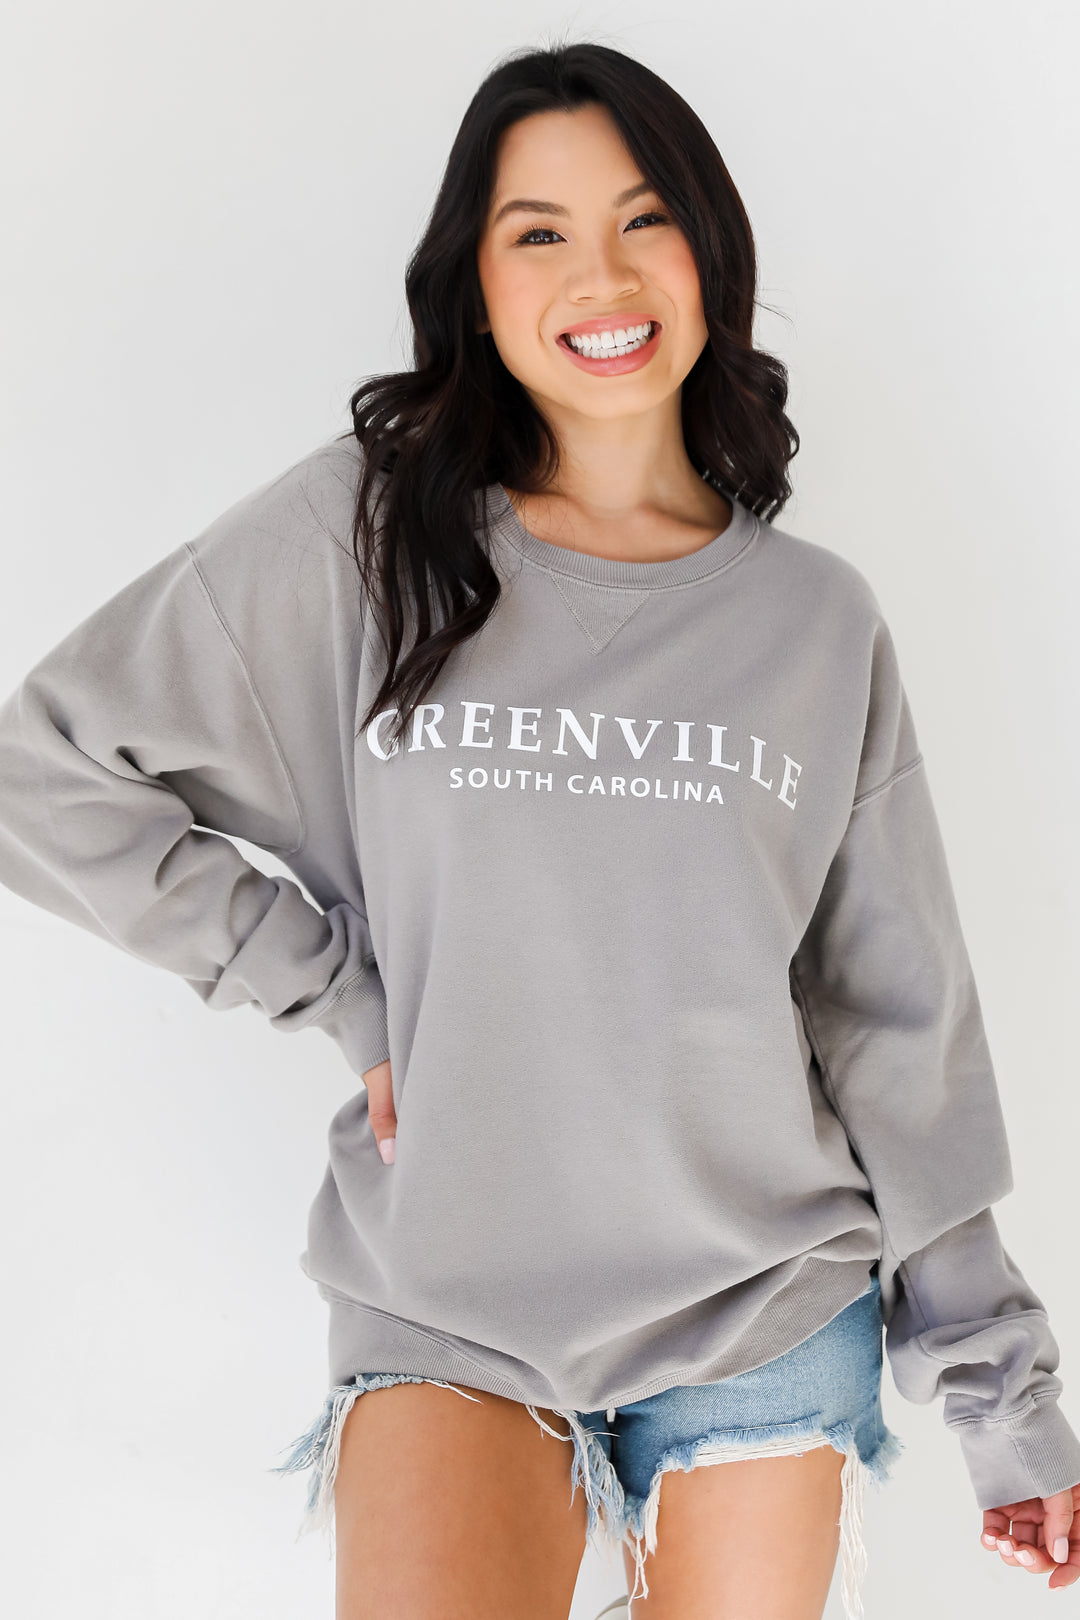 Grey Greenville South Carolina Pullover on dress up model